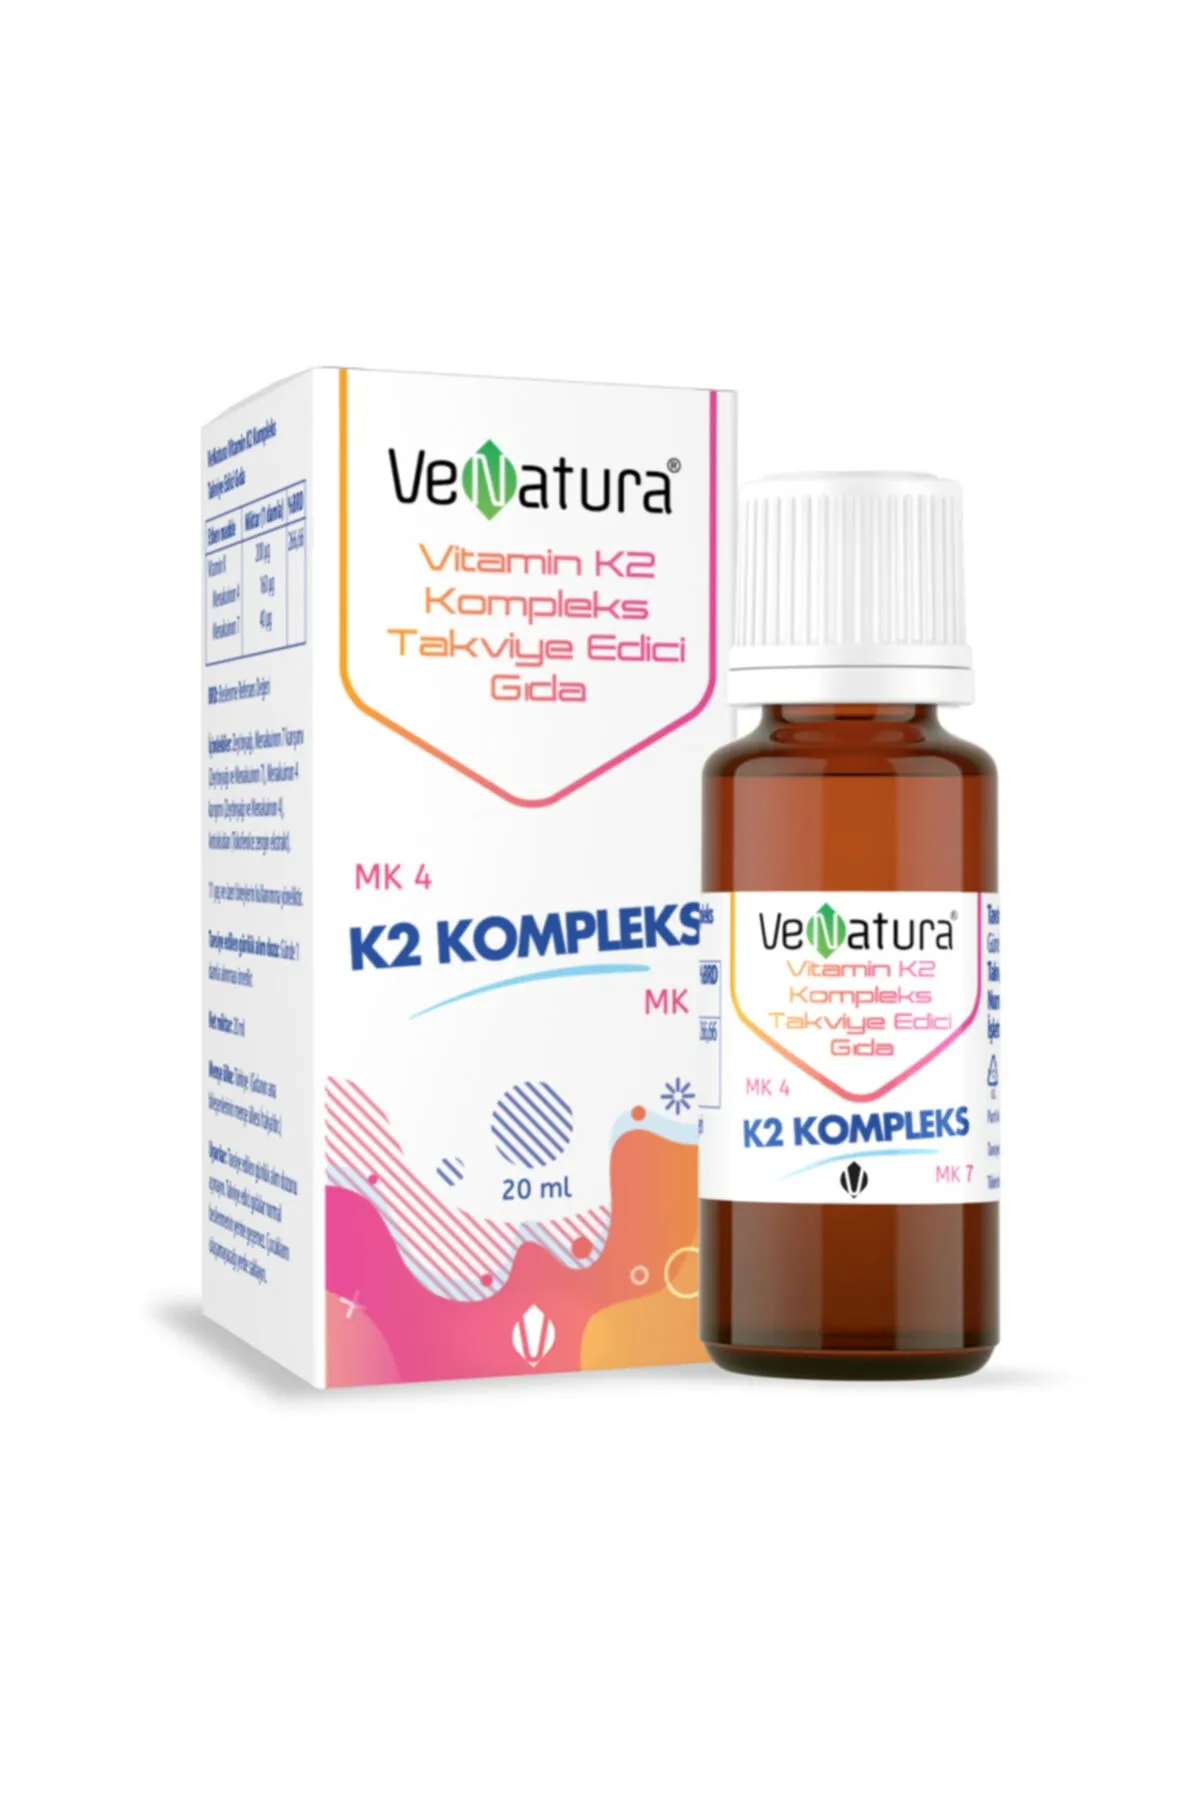 Venatura Vitamin K2 Kompleks Damla 20 ml - 1